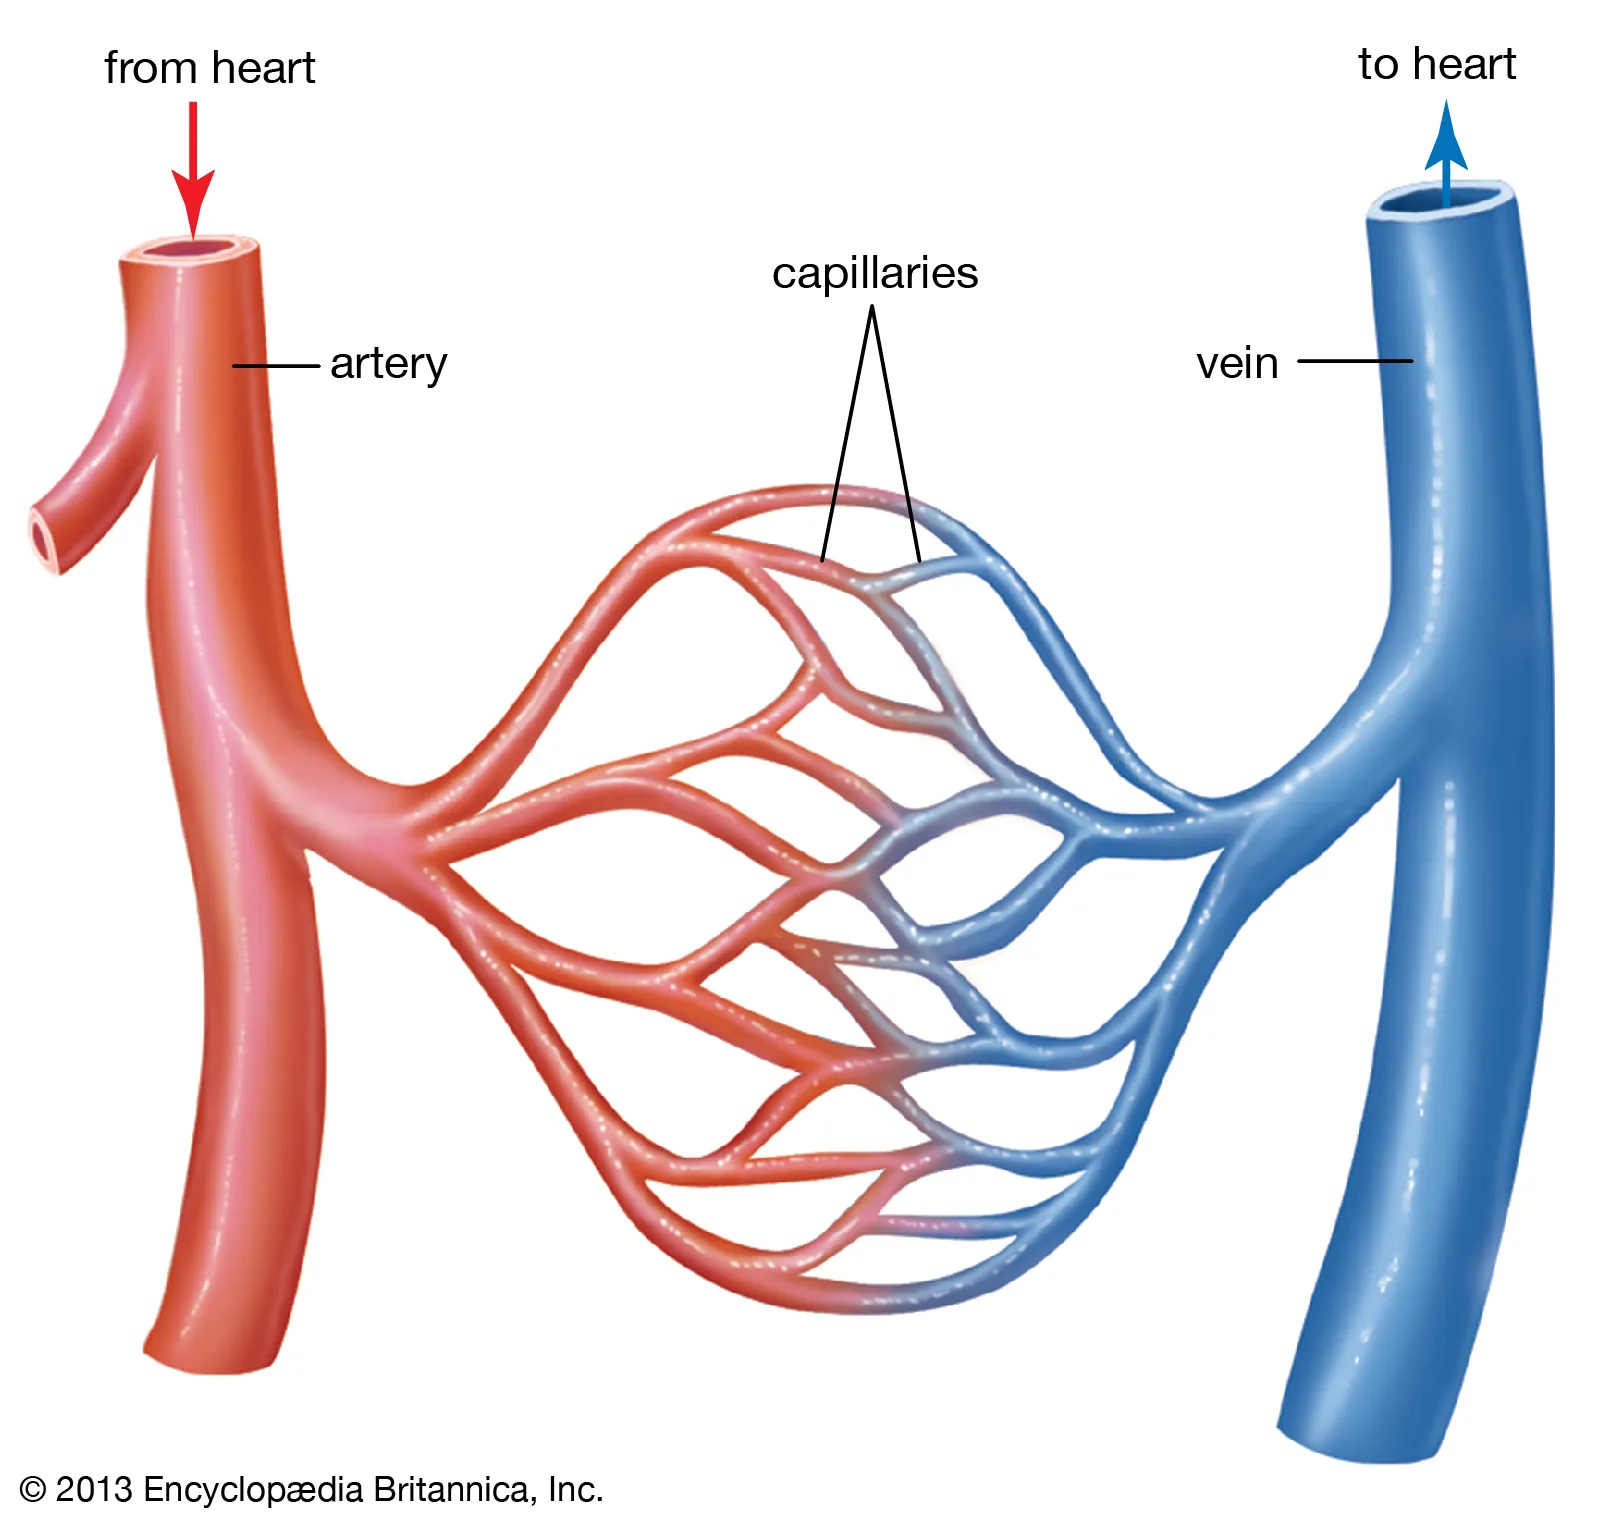 figure showing artery, vein, and capillary